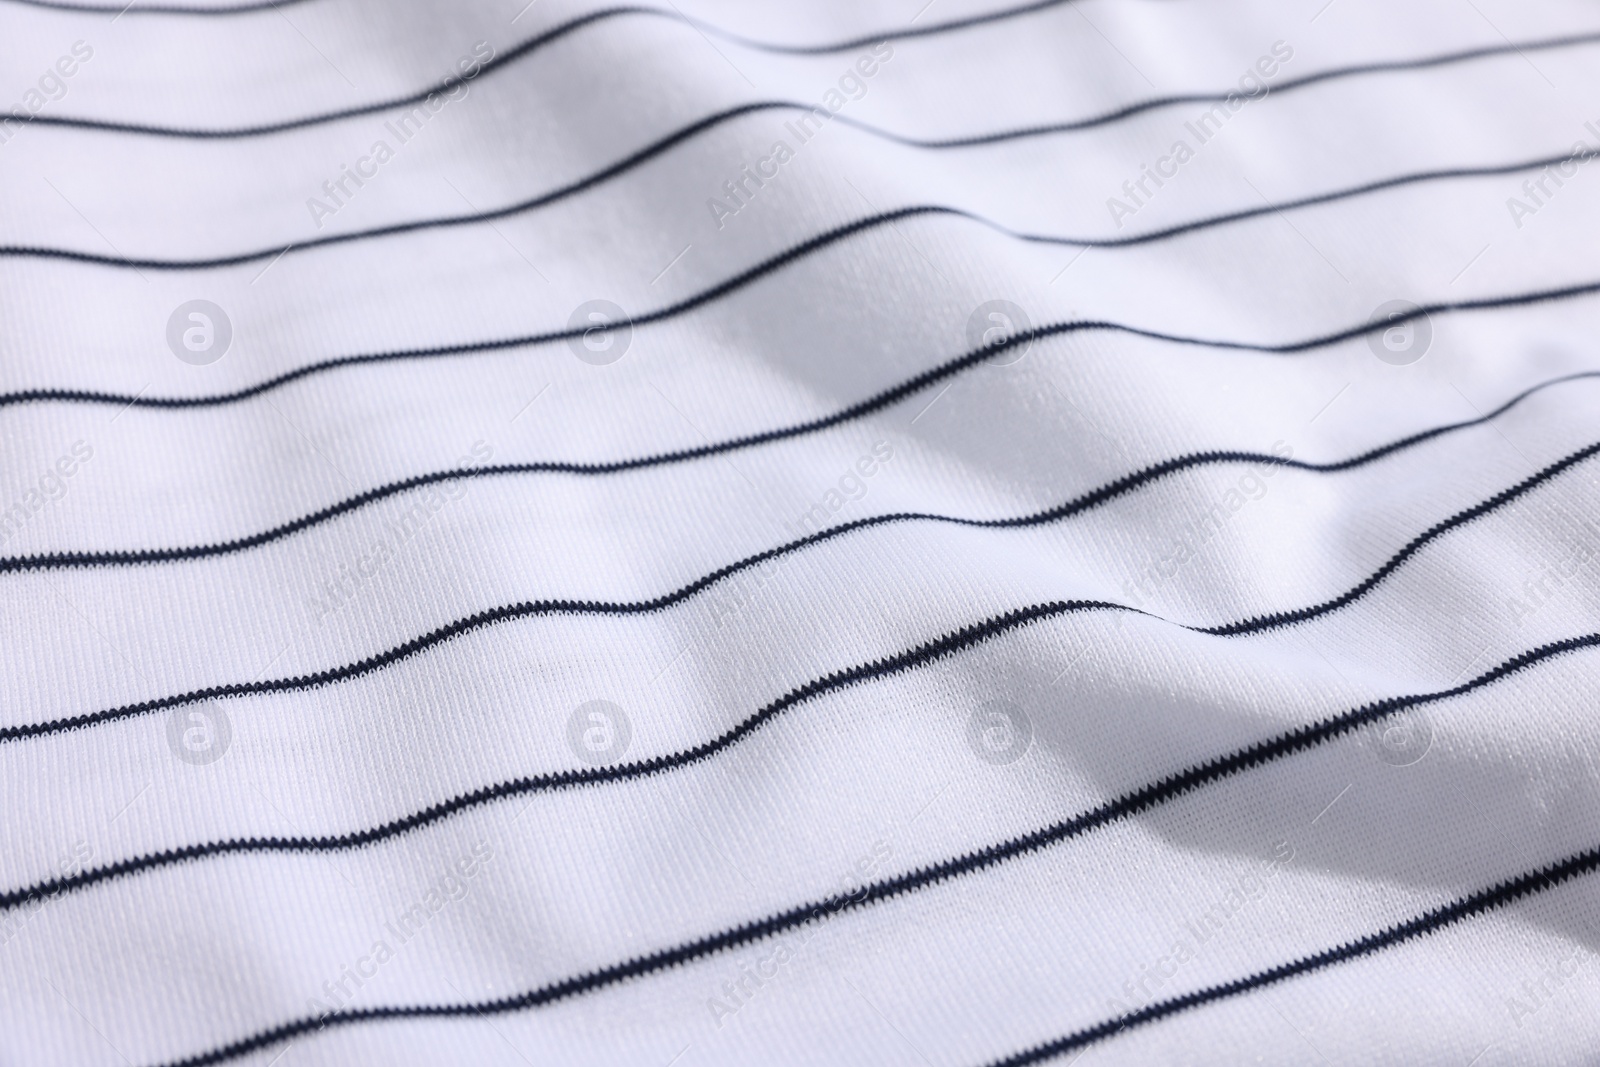 Photo of Striped baseball uniform as background, closeup view